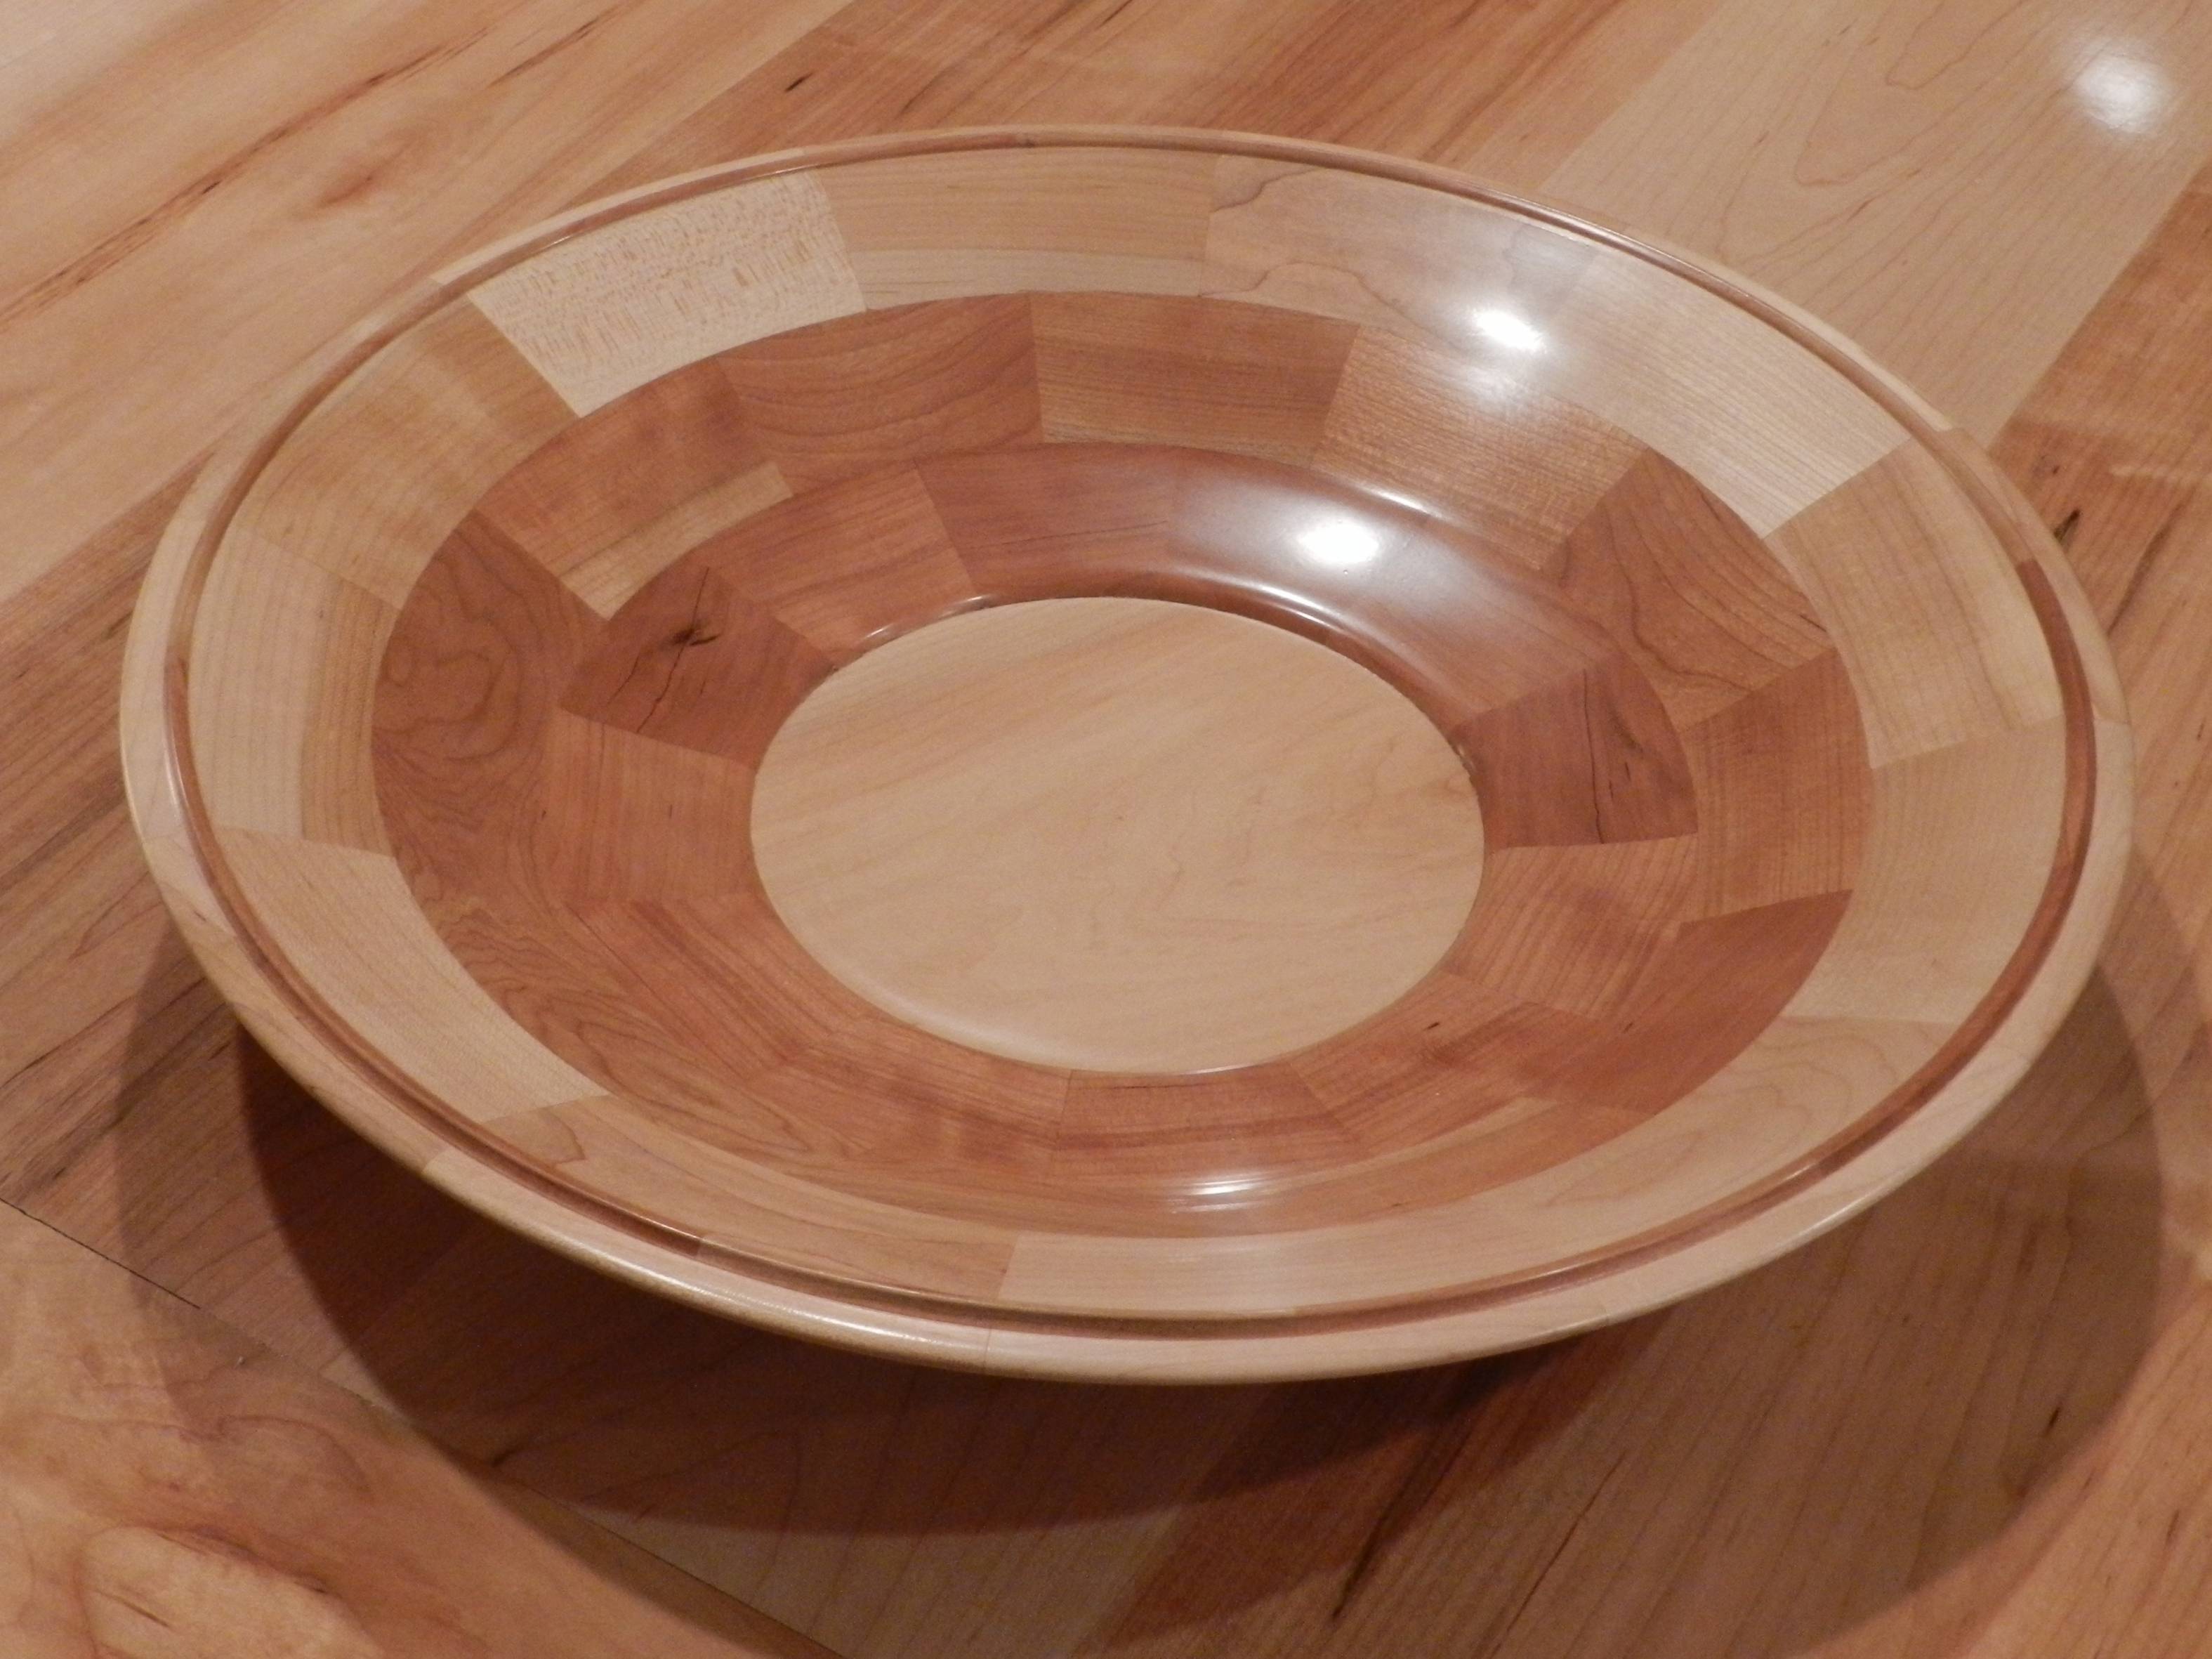 Segmented bowl 16"